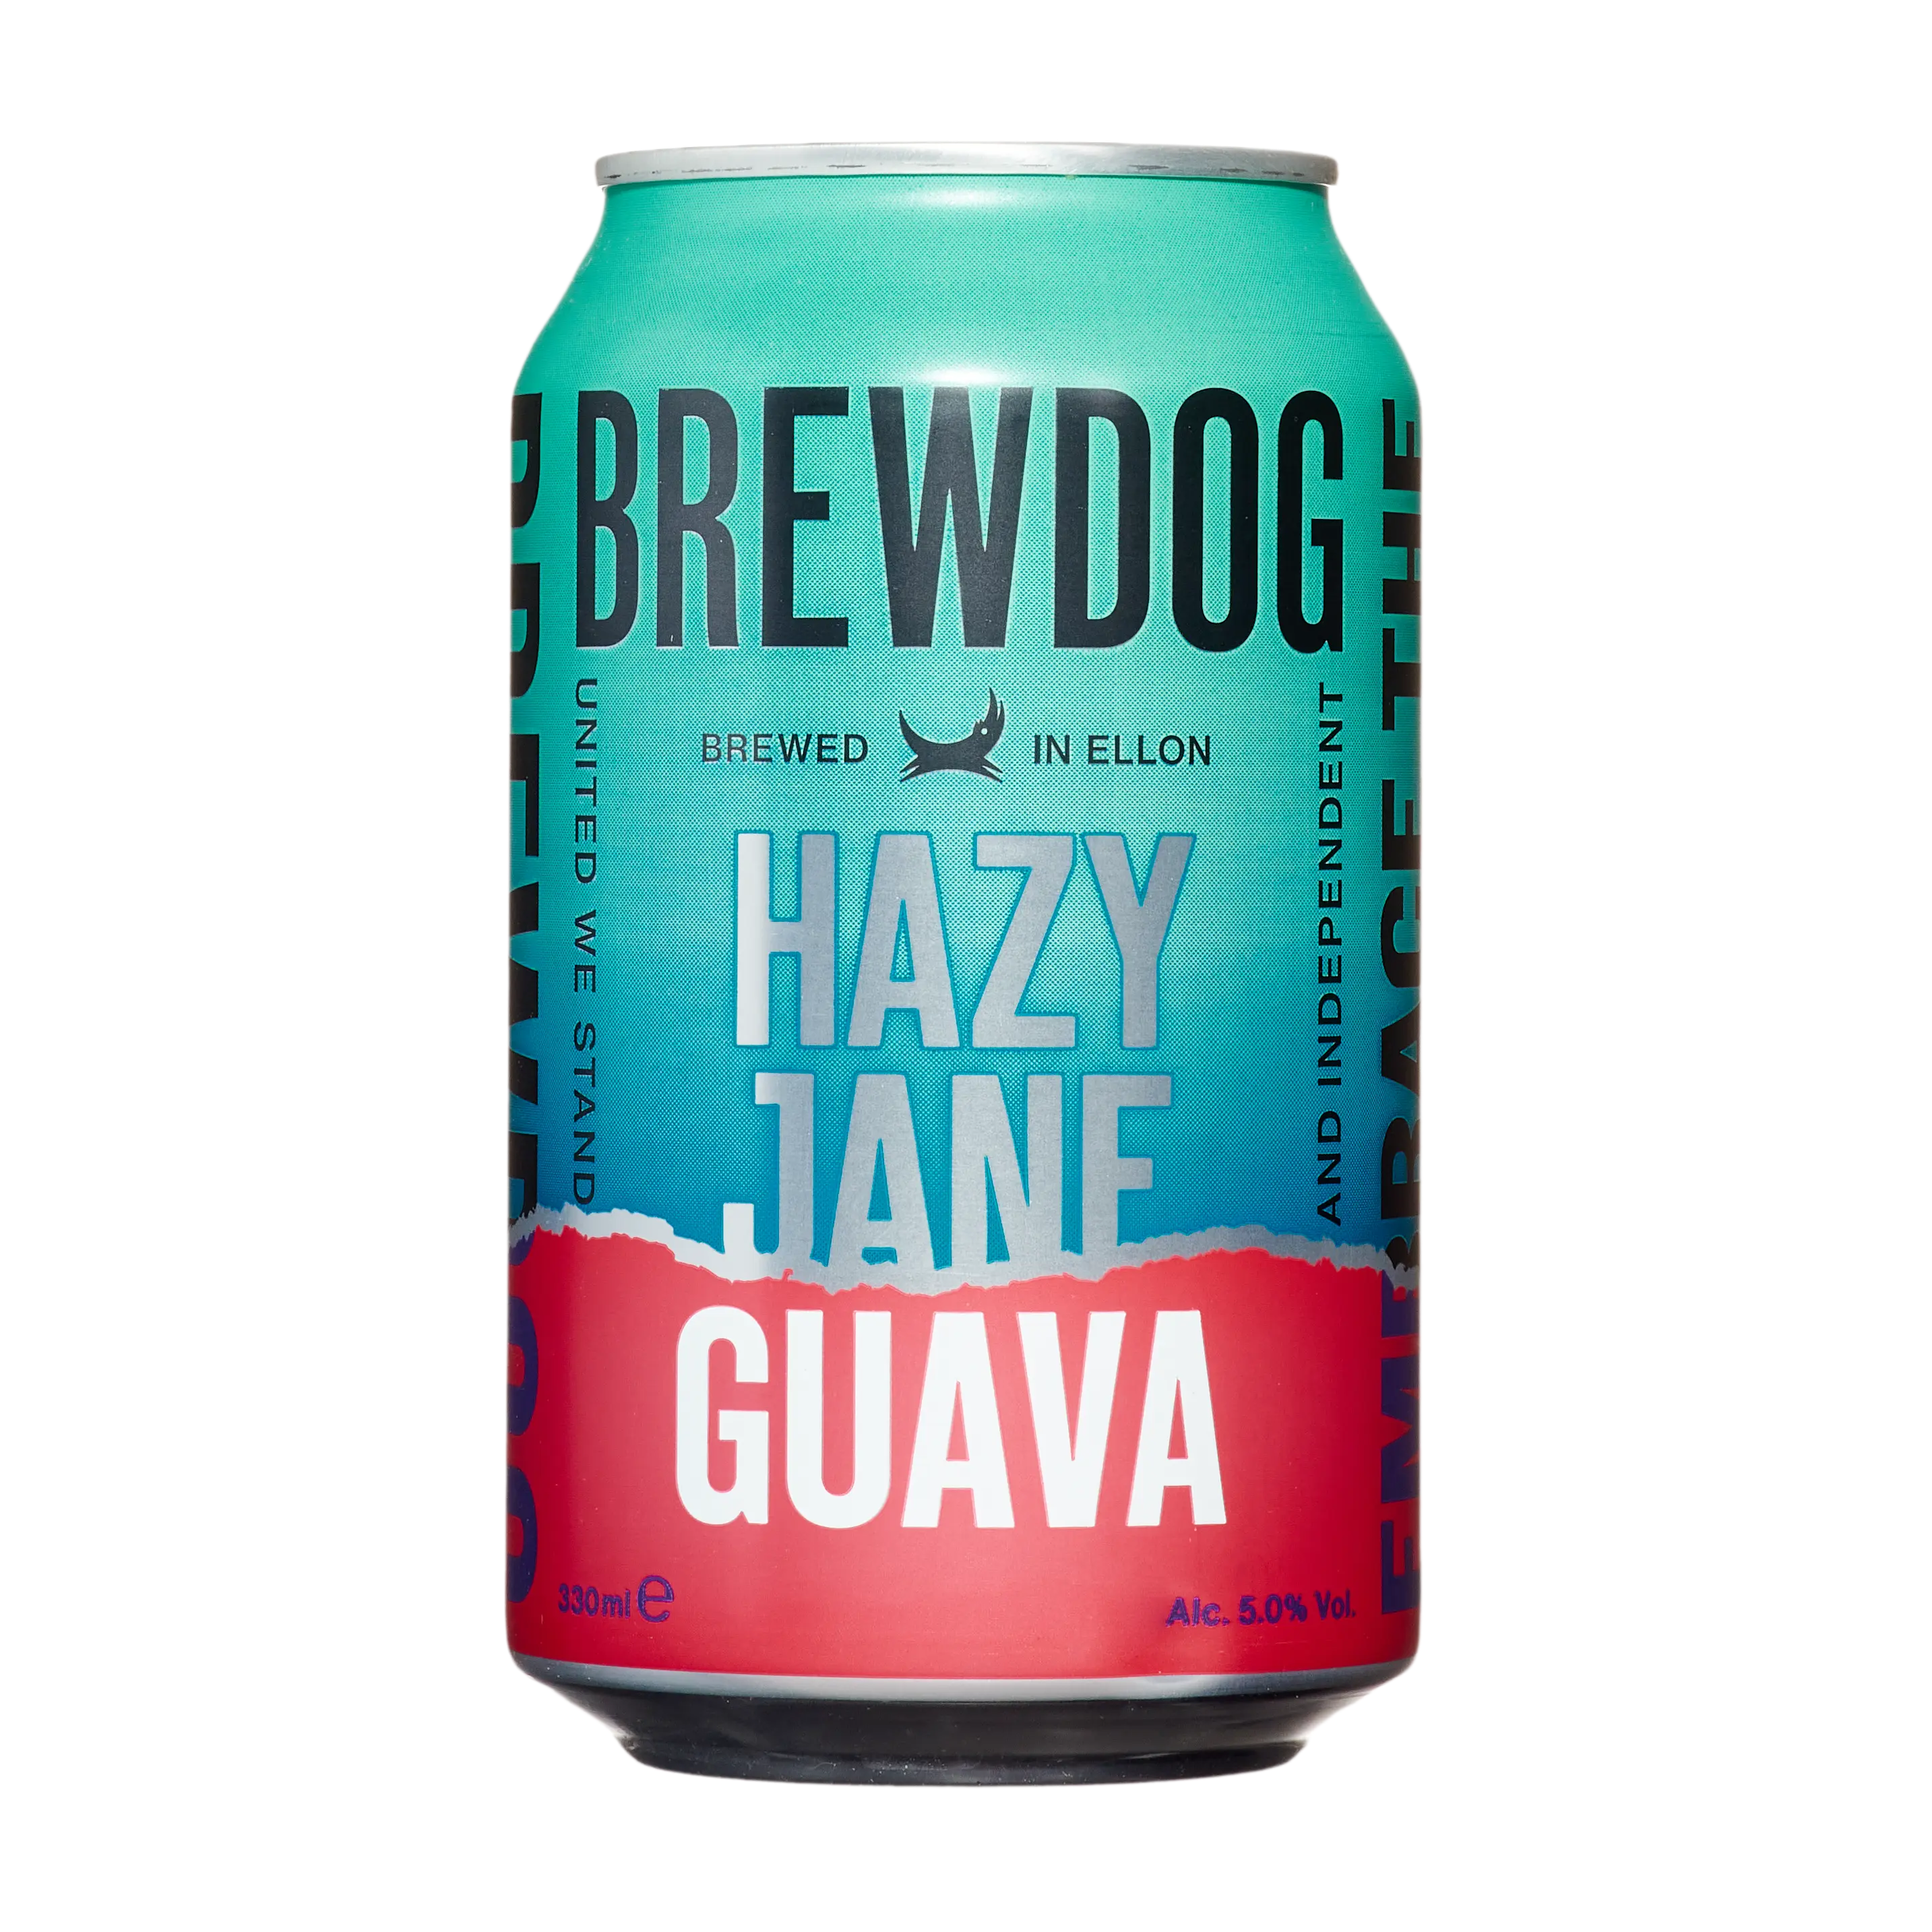 Brewdog Hazy Jane Guava 1